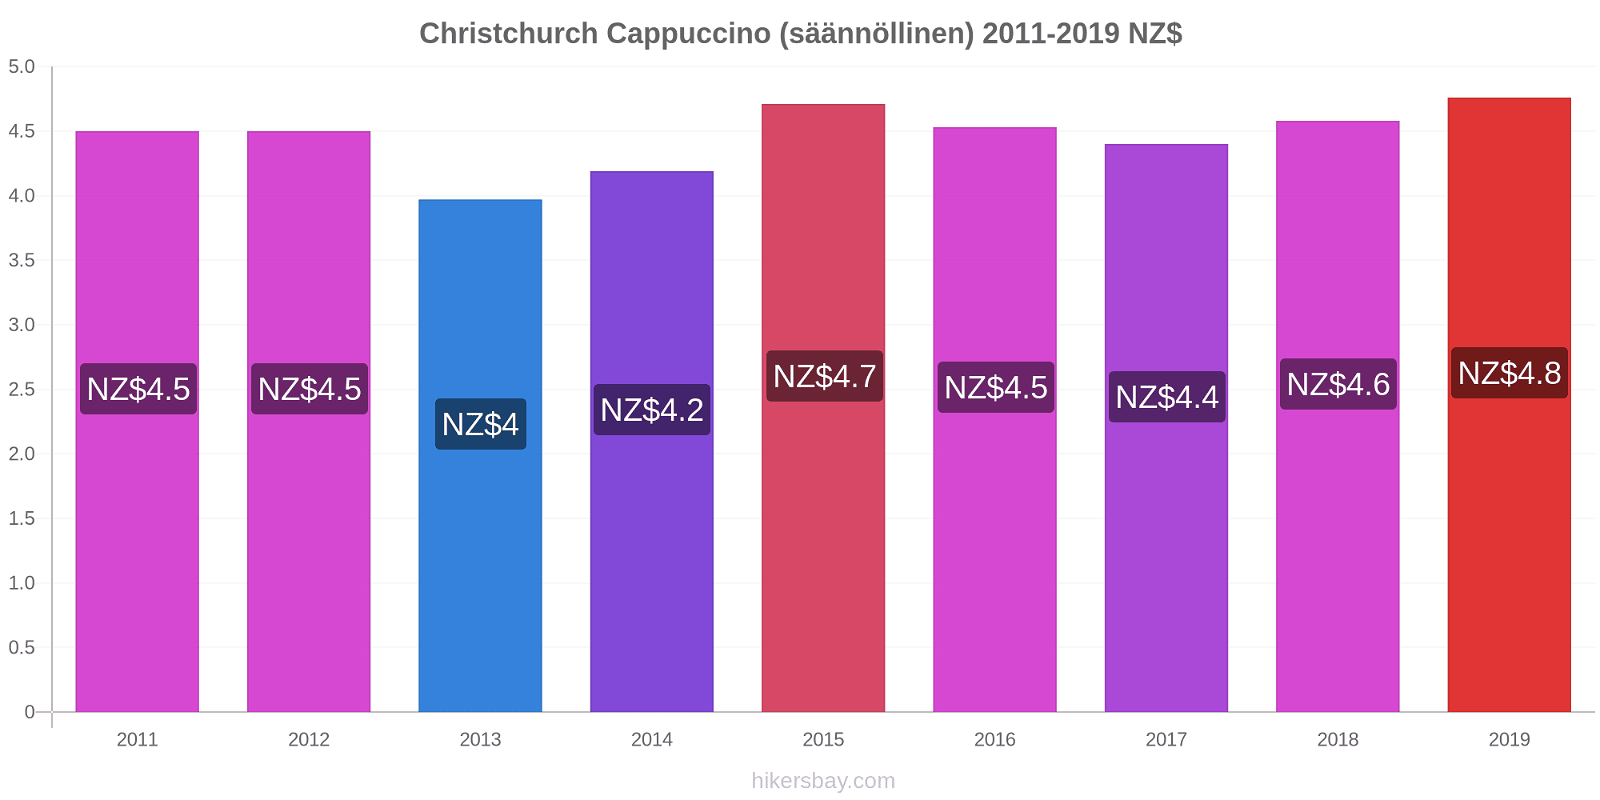 Christchurch hintojen muutokset Cappuccino (säännöllinen) hikersbay.com